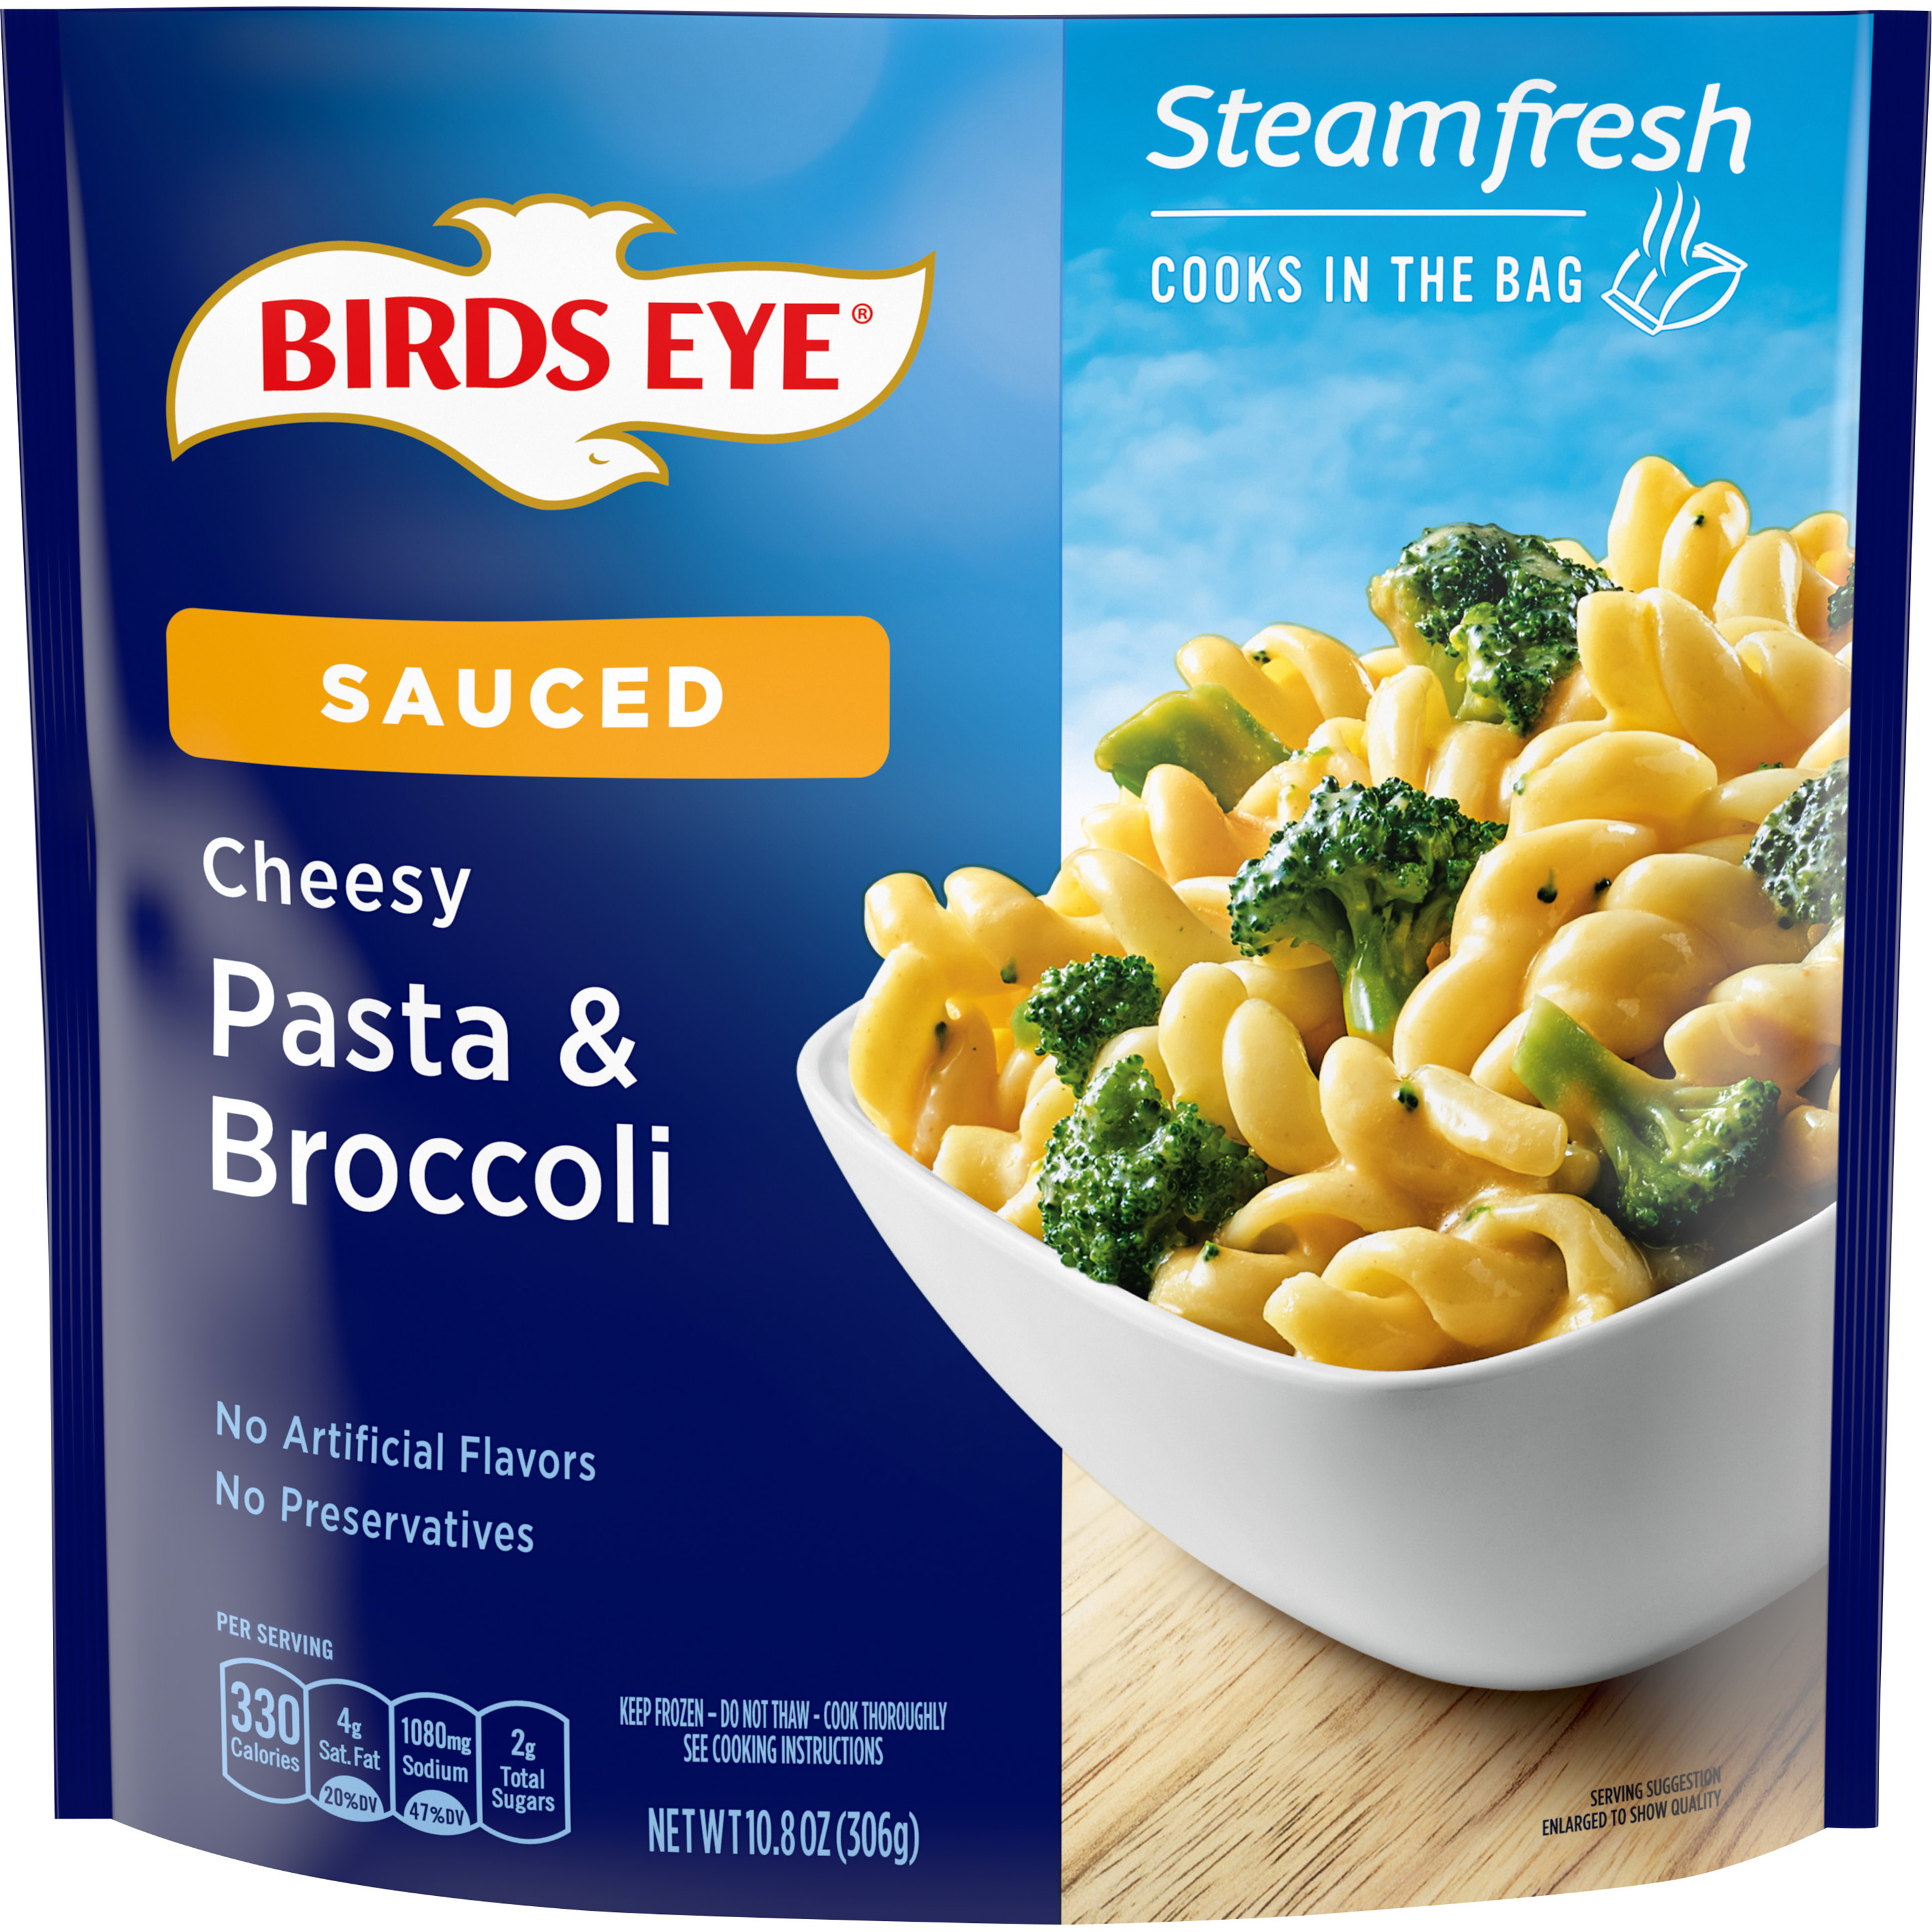 Birds Eye Steamfresh Chef’s Favorites Sauced Pasta & Broccoli with Cheese Sauce